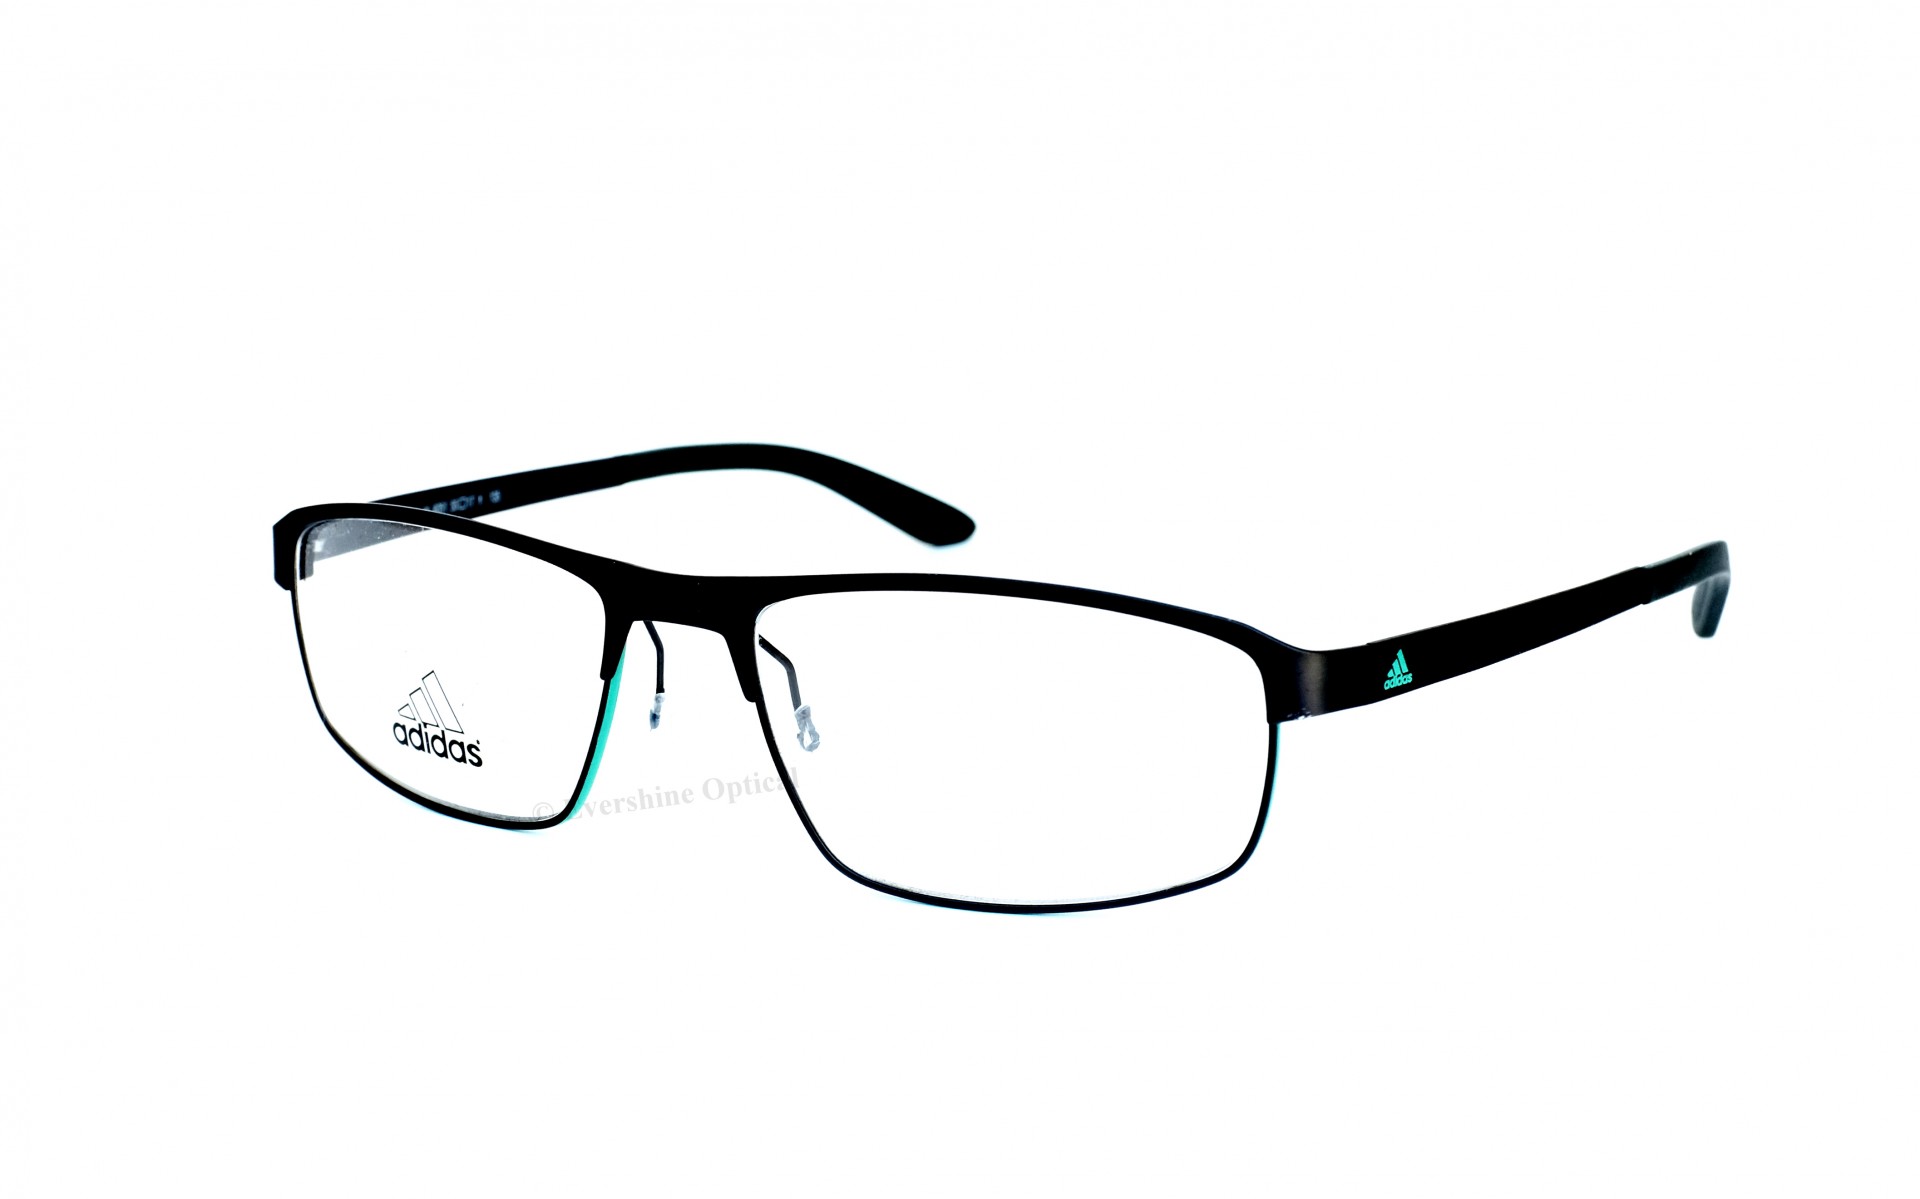 Polinizador costo Aturdir New Eyewear from Adidas - Evershine Optical